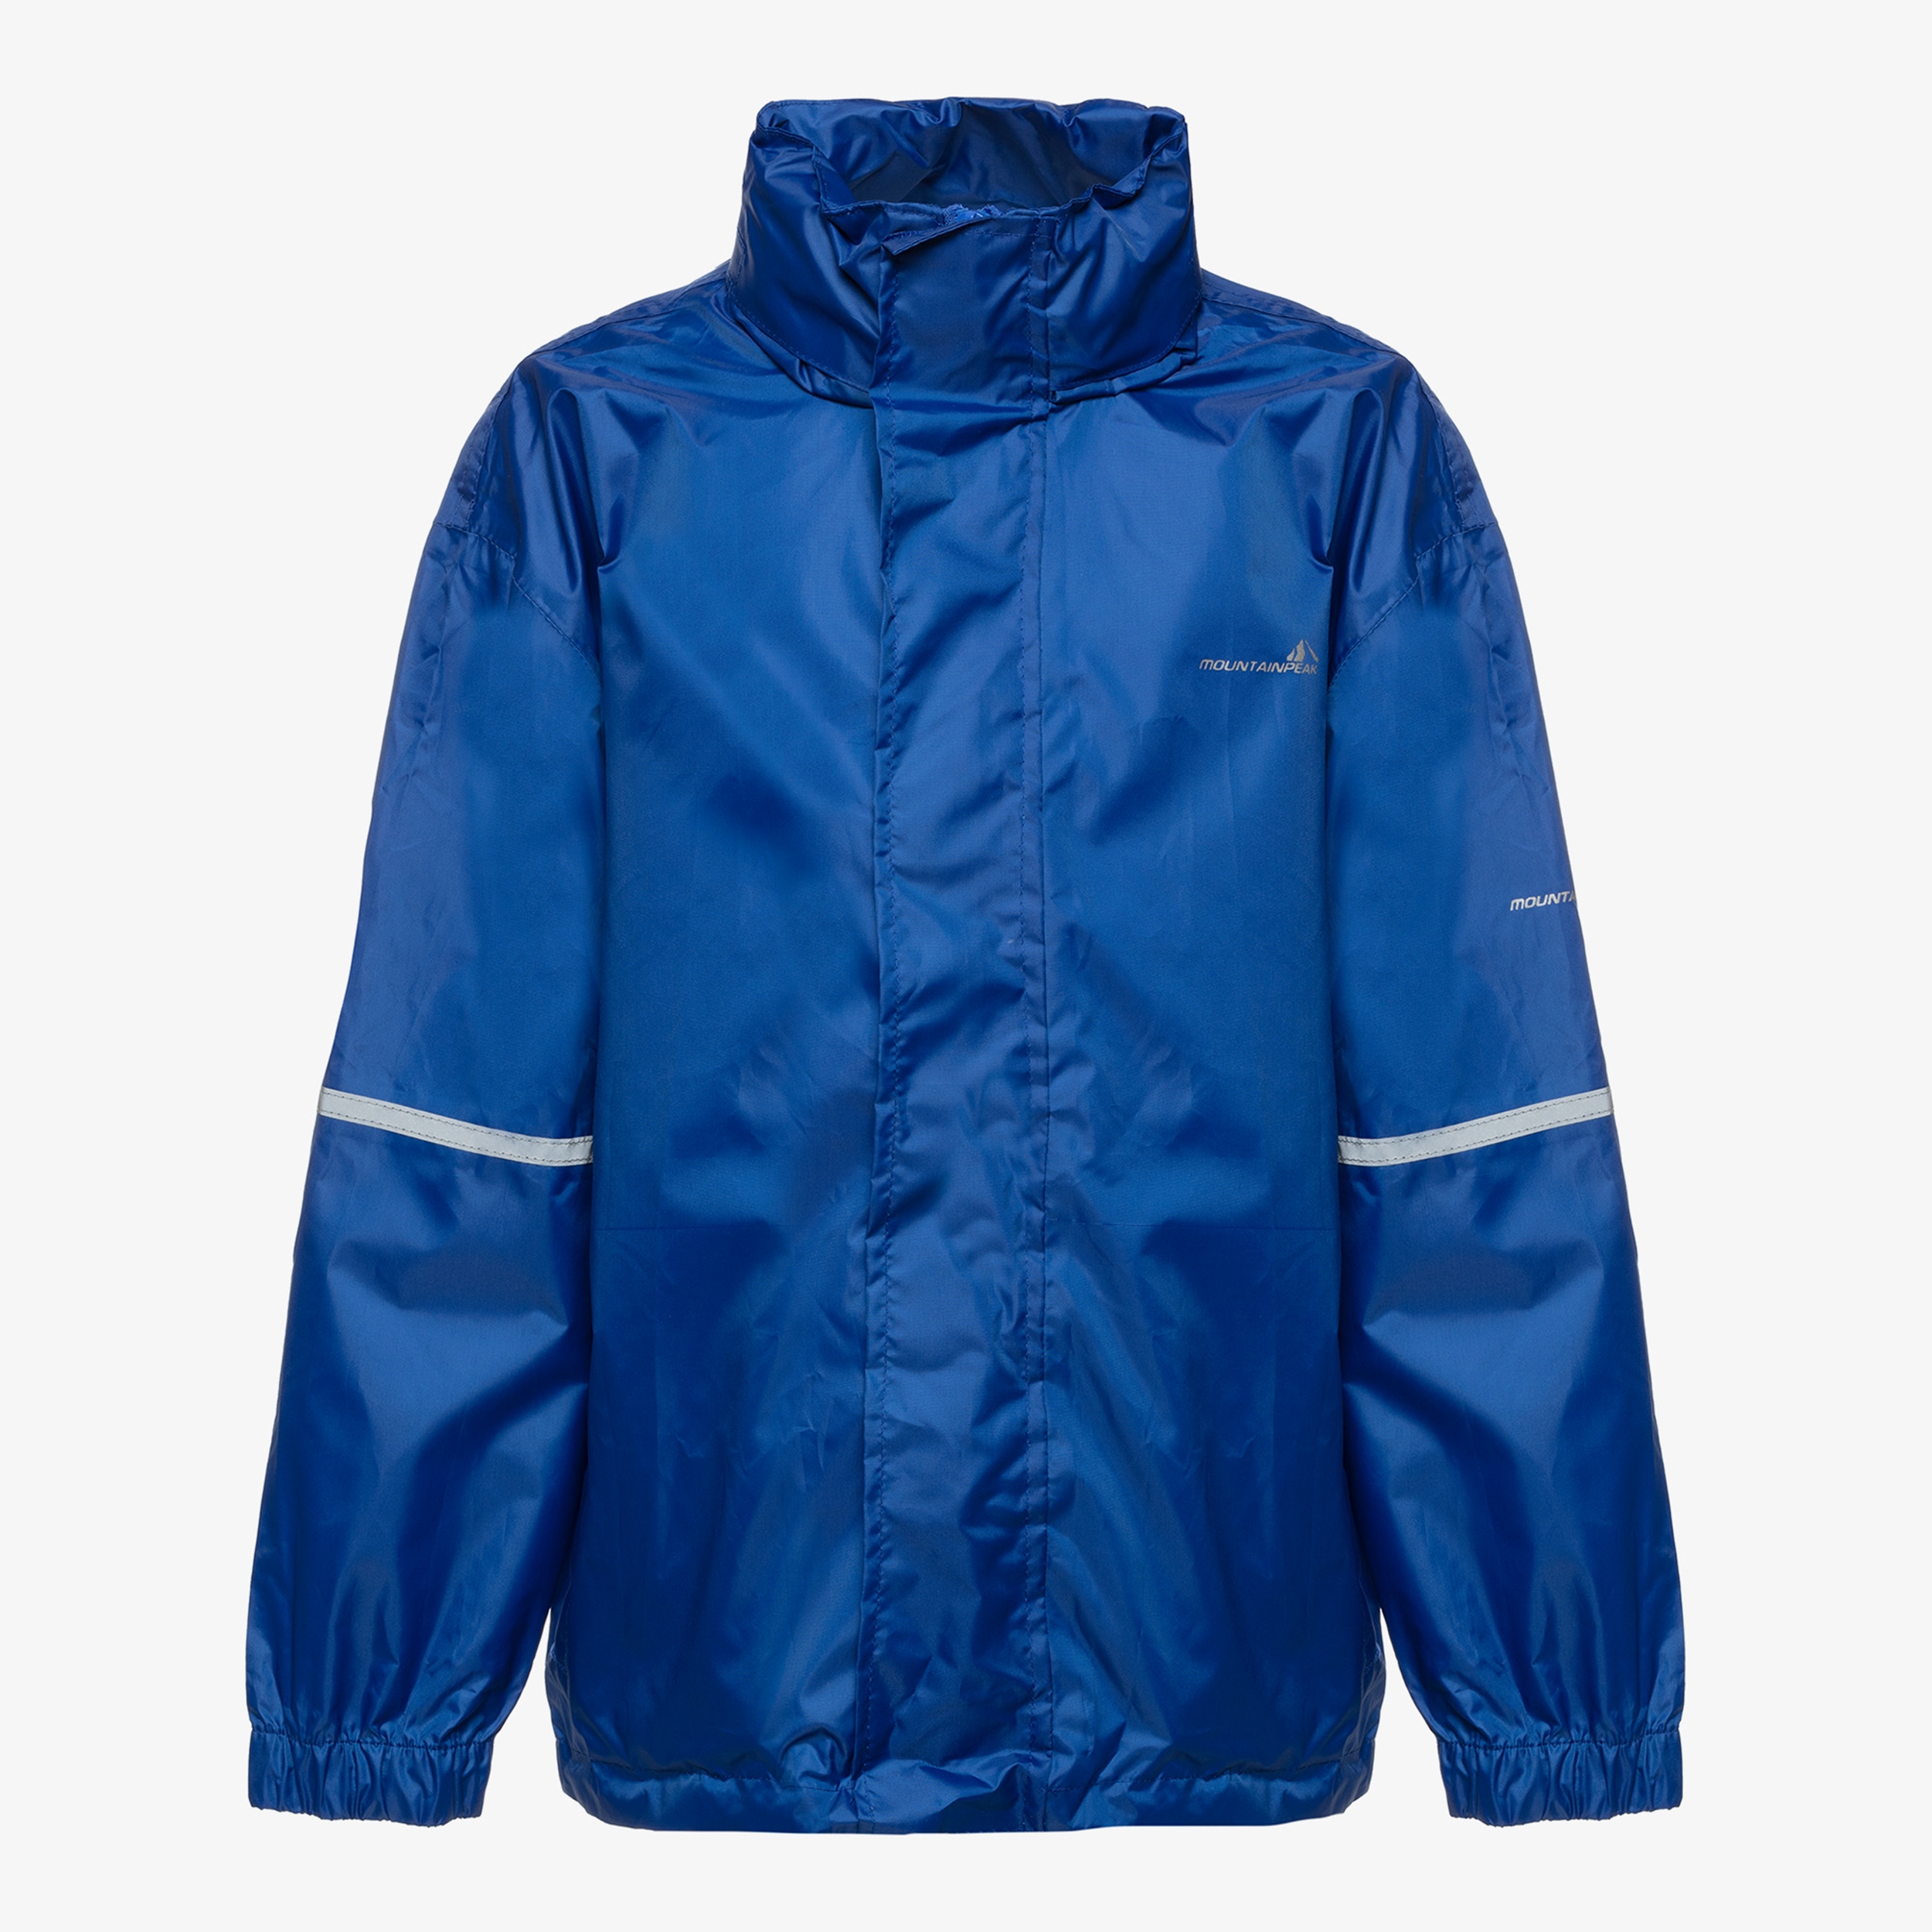 marineblauw Unisex kinderen 104 cm 104 functionele jas 3-in-1 regenjas Amazon Sport- & Badmode Regenkleding marineblauw 